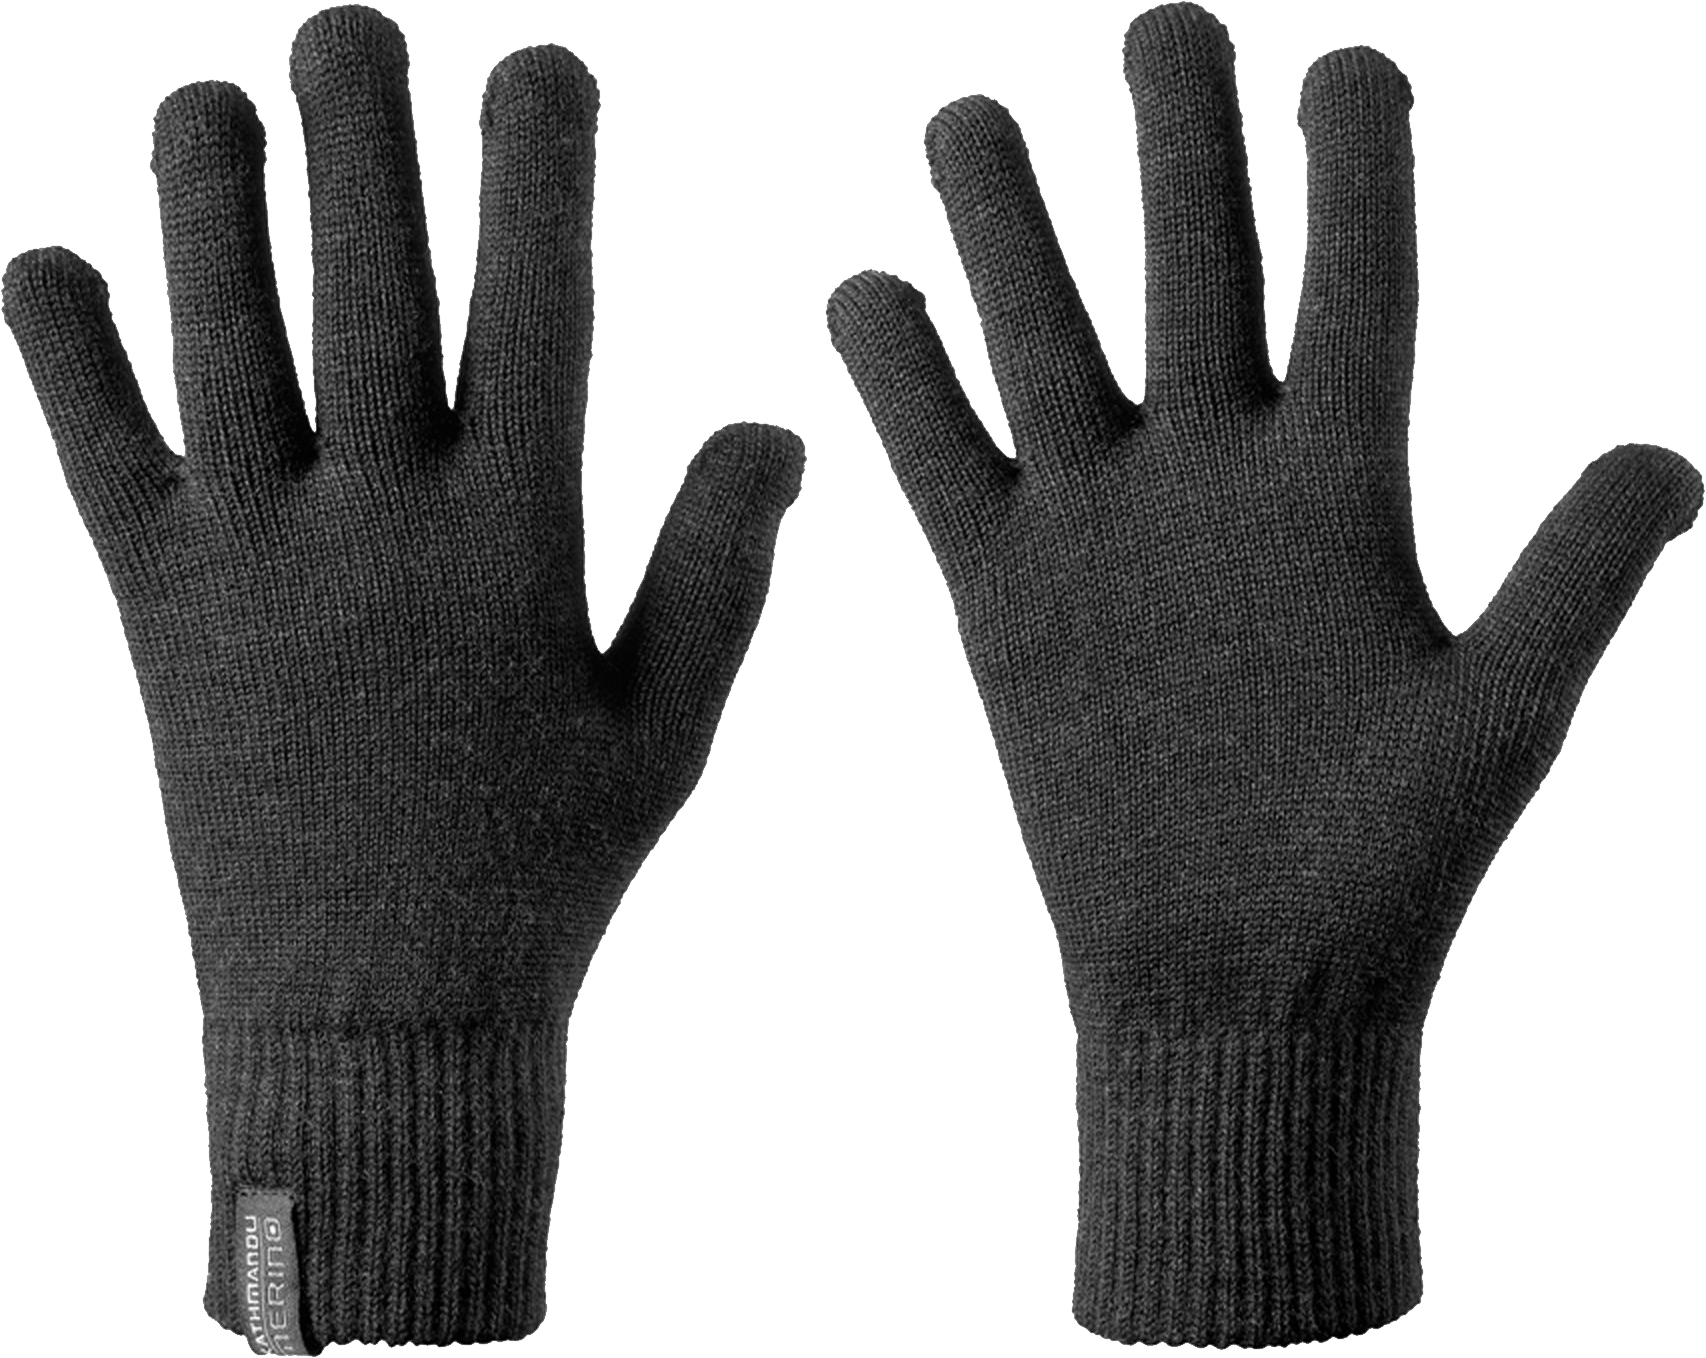 Gloves Png Image - Gloves, Transparent background PNG HD thumbnail